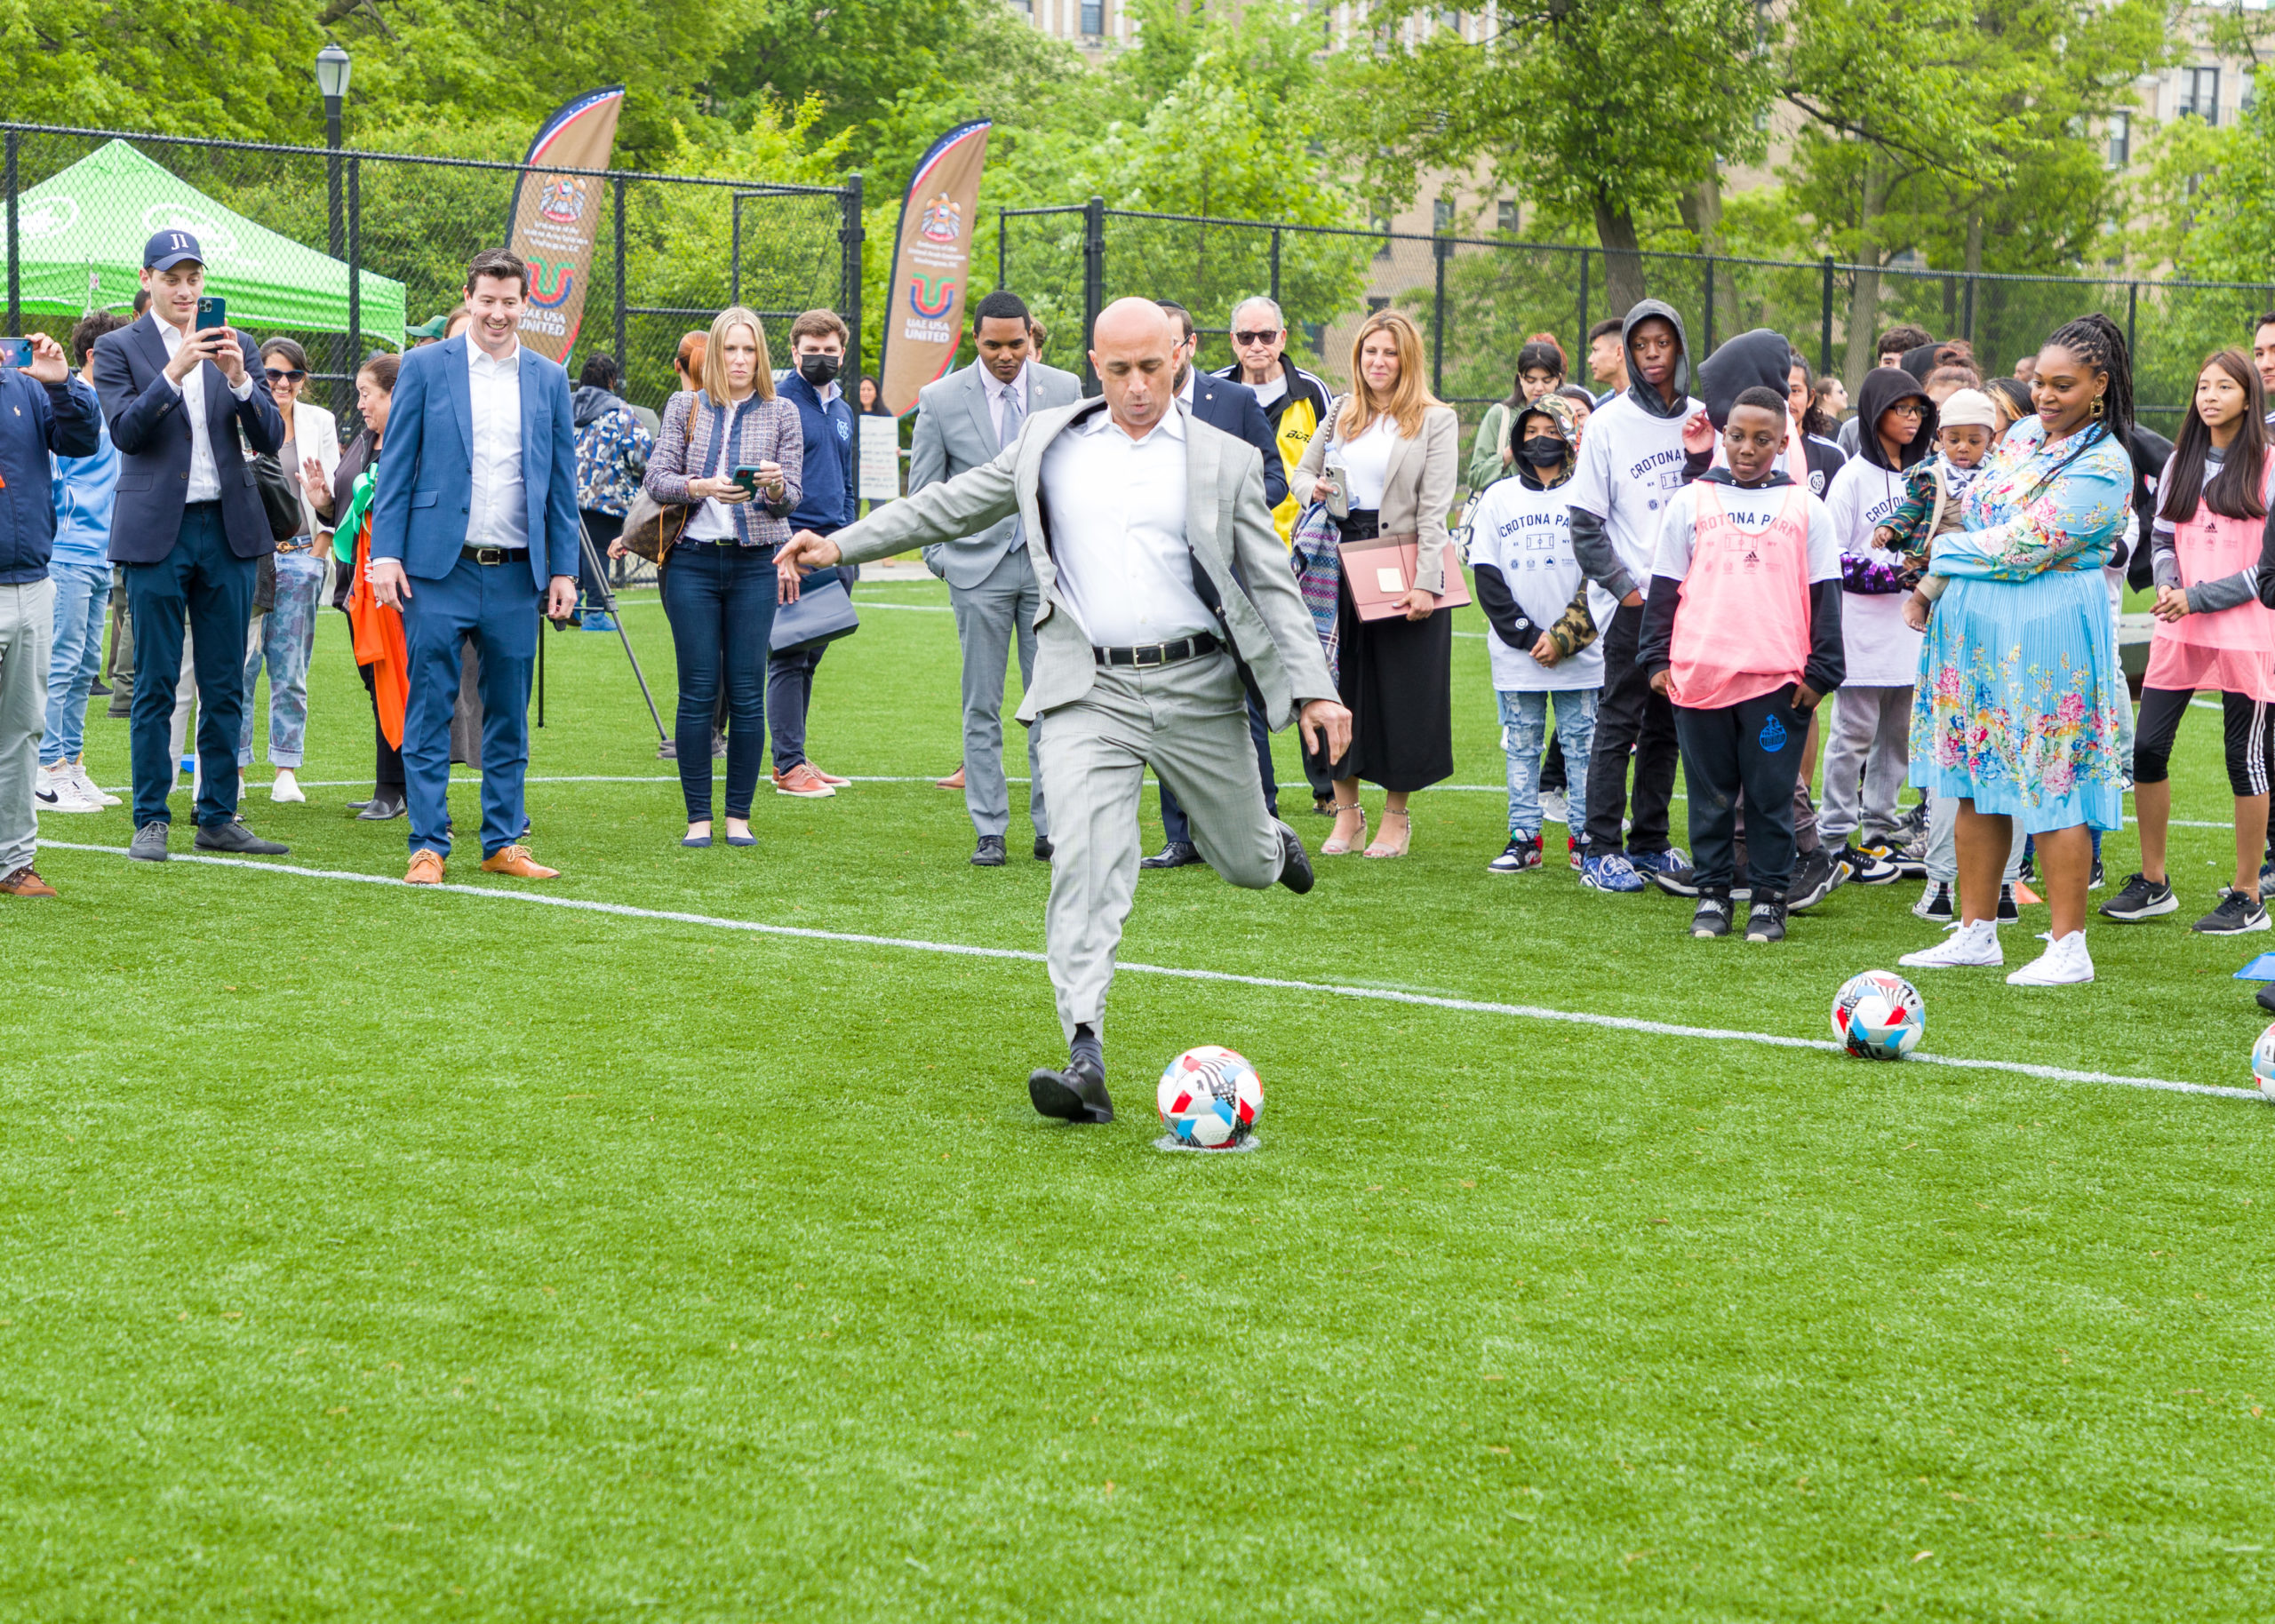 Ambassador Al Otaiba plays soccer at Crotona Park soccer field